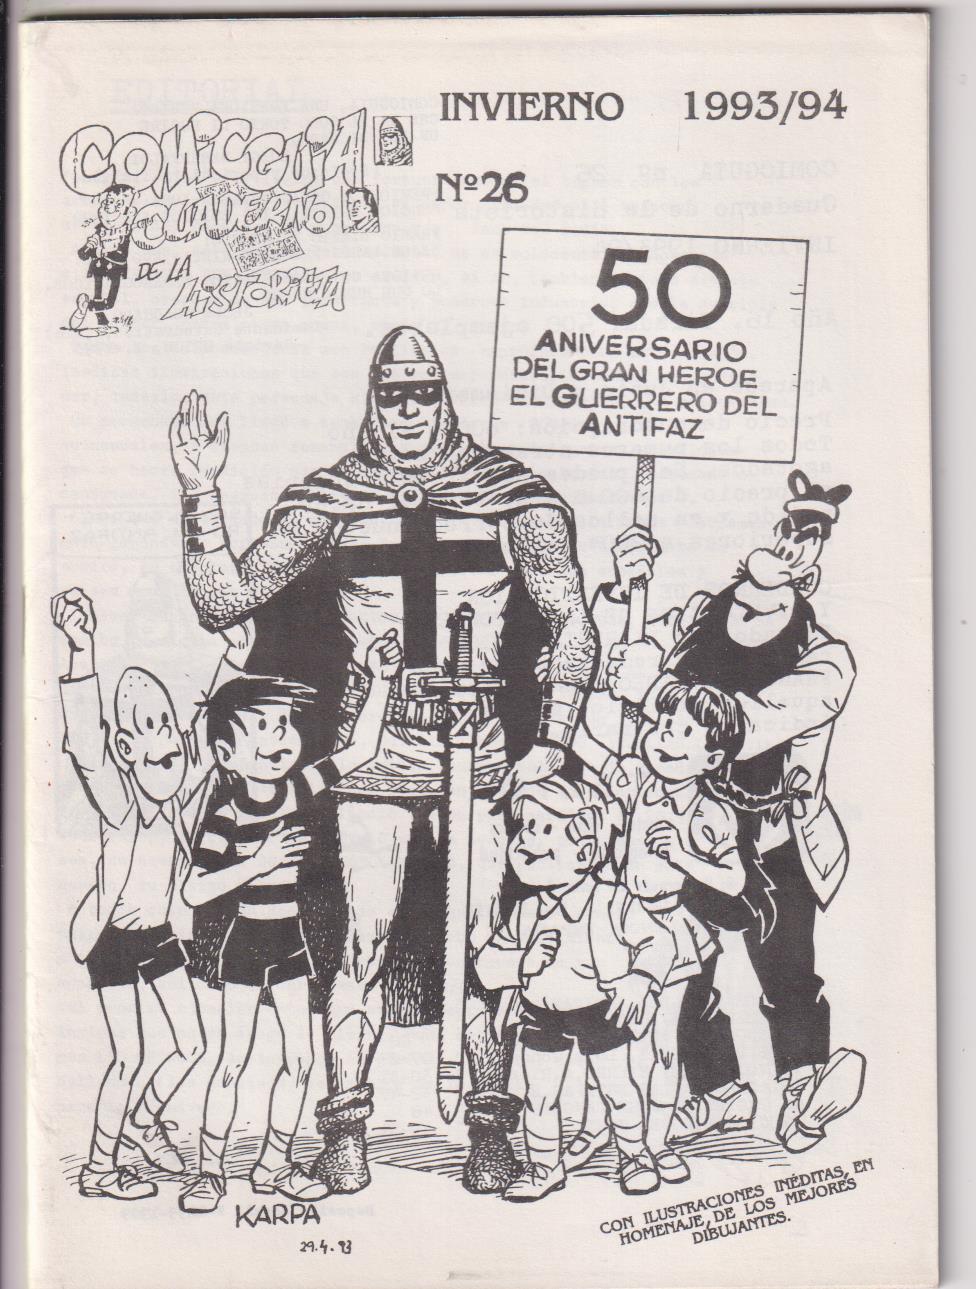 Comic Guía nº 26. Invierno 1993/94